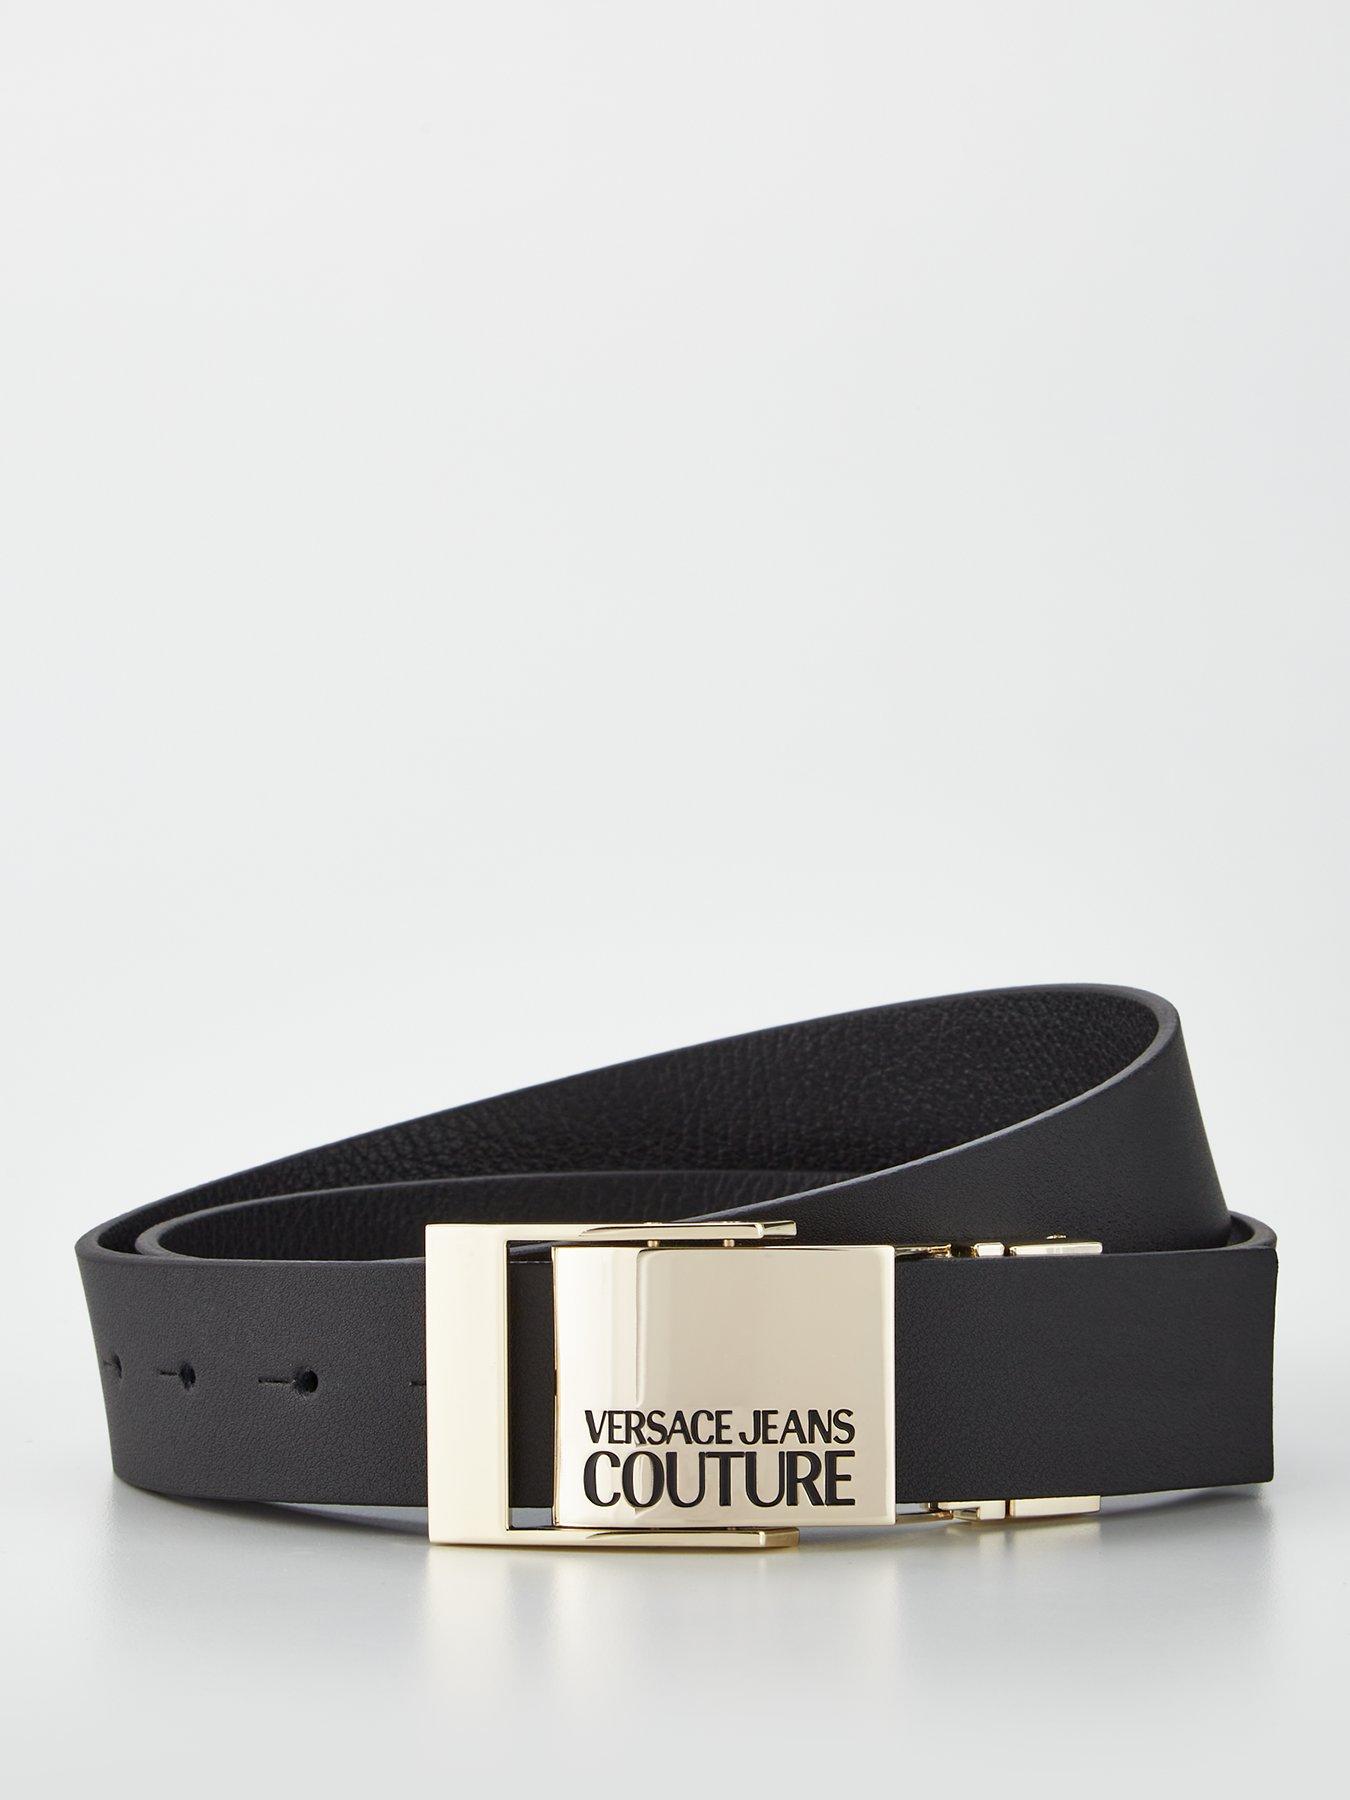 Versace Jeans Leather Black Brand Logo Belt